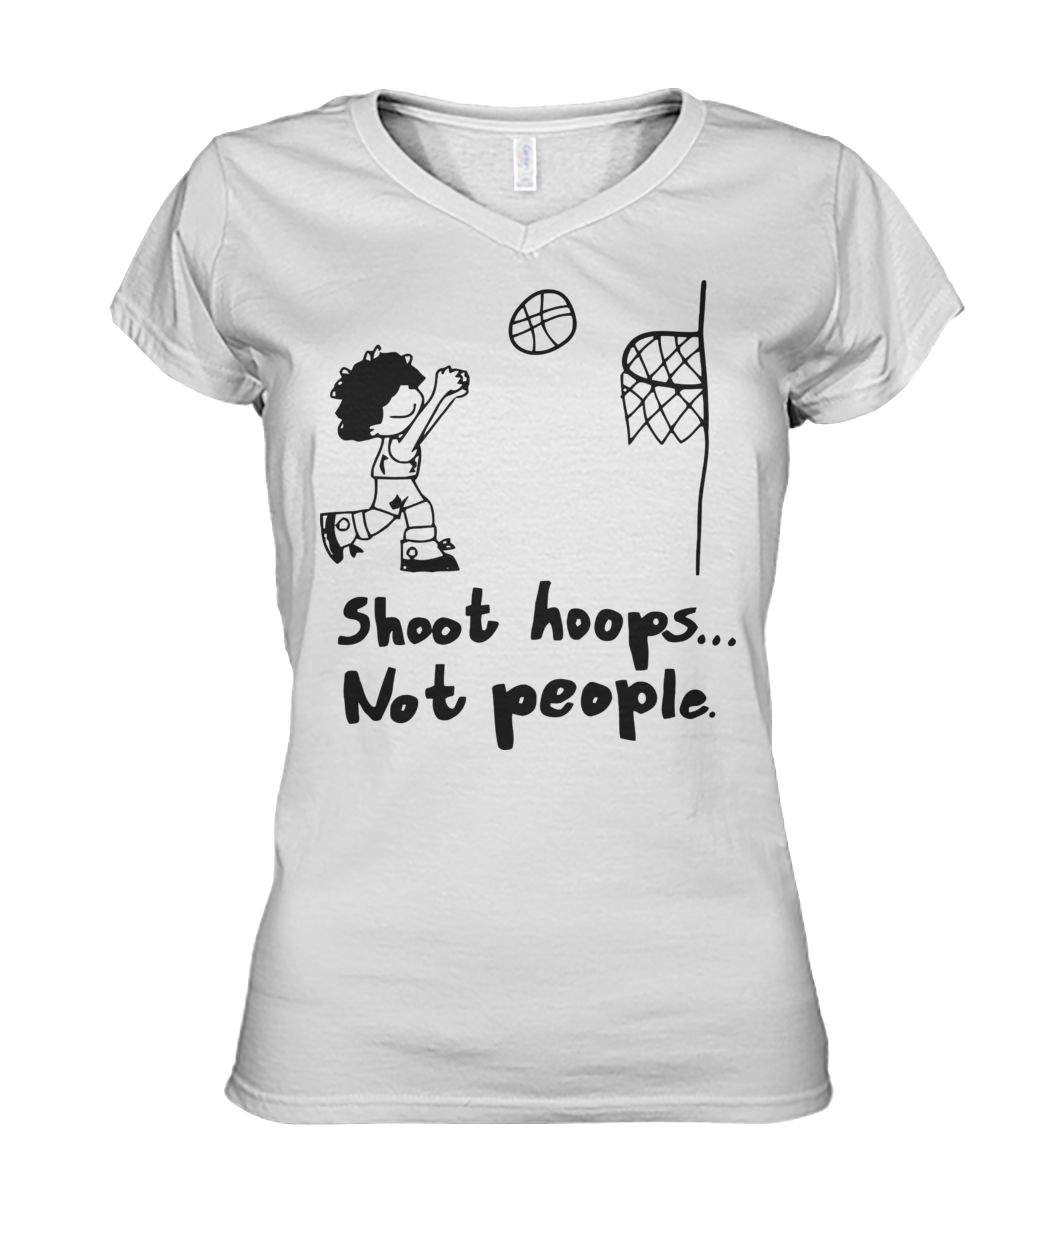 Shoot hoops not people women's v-neck